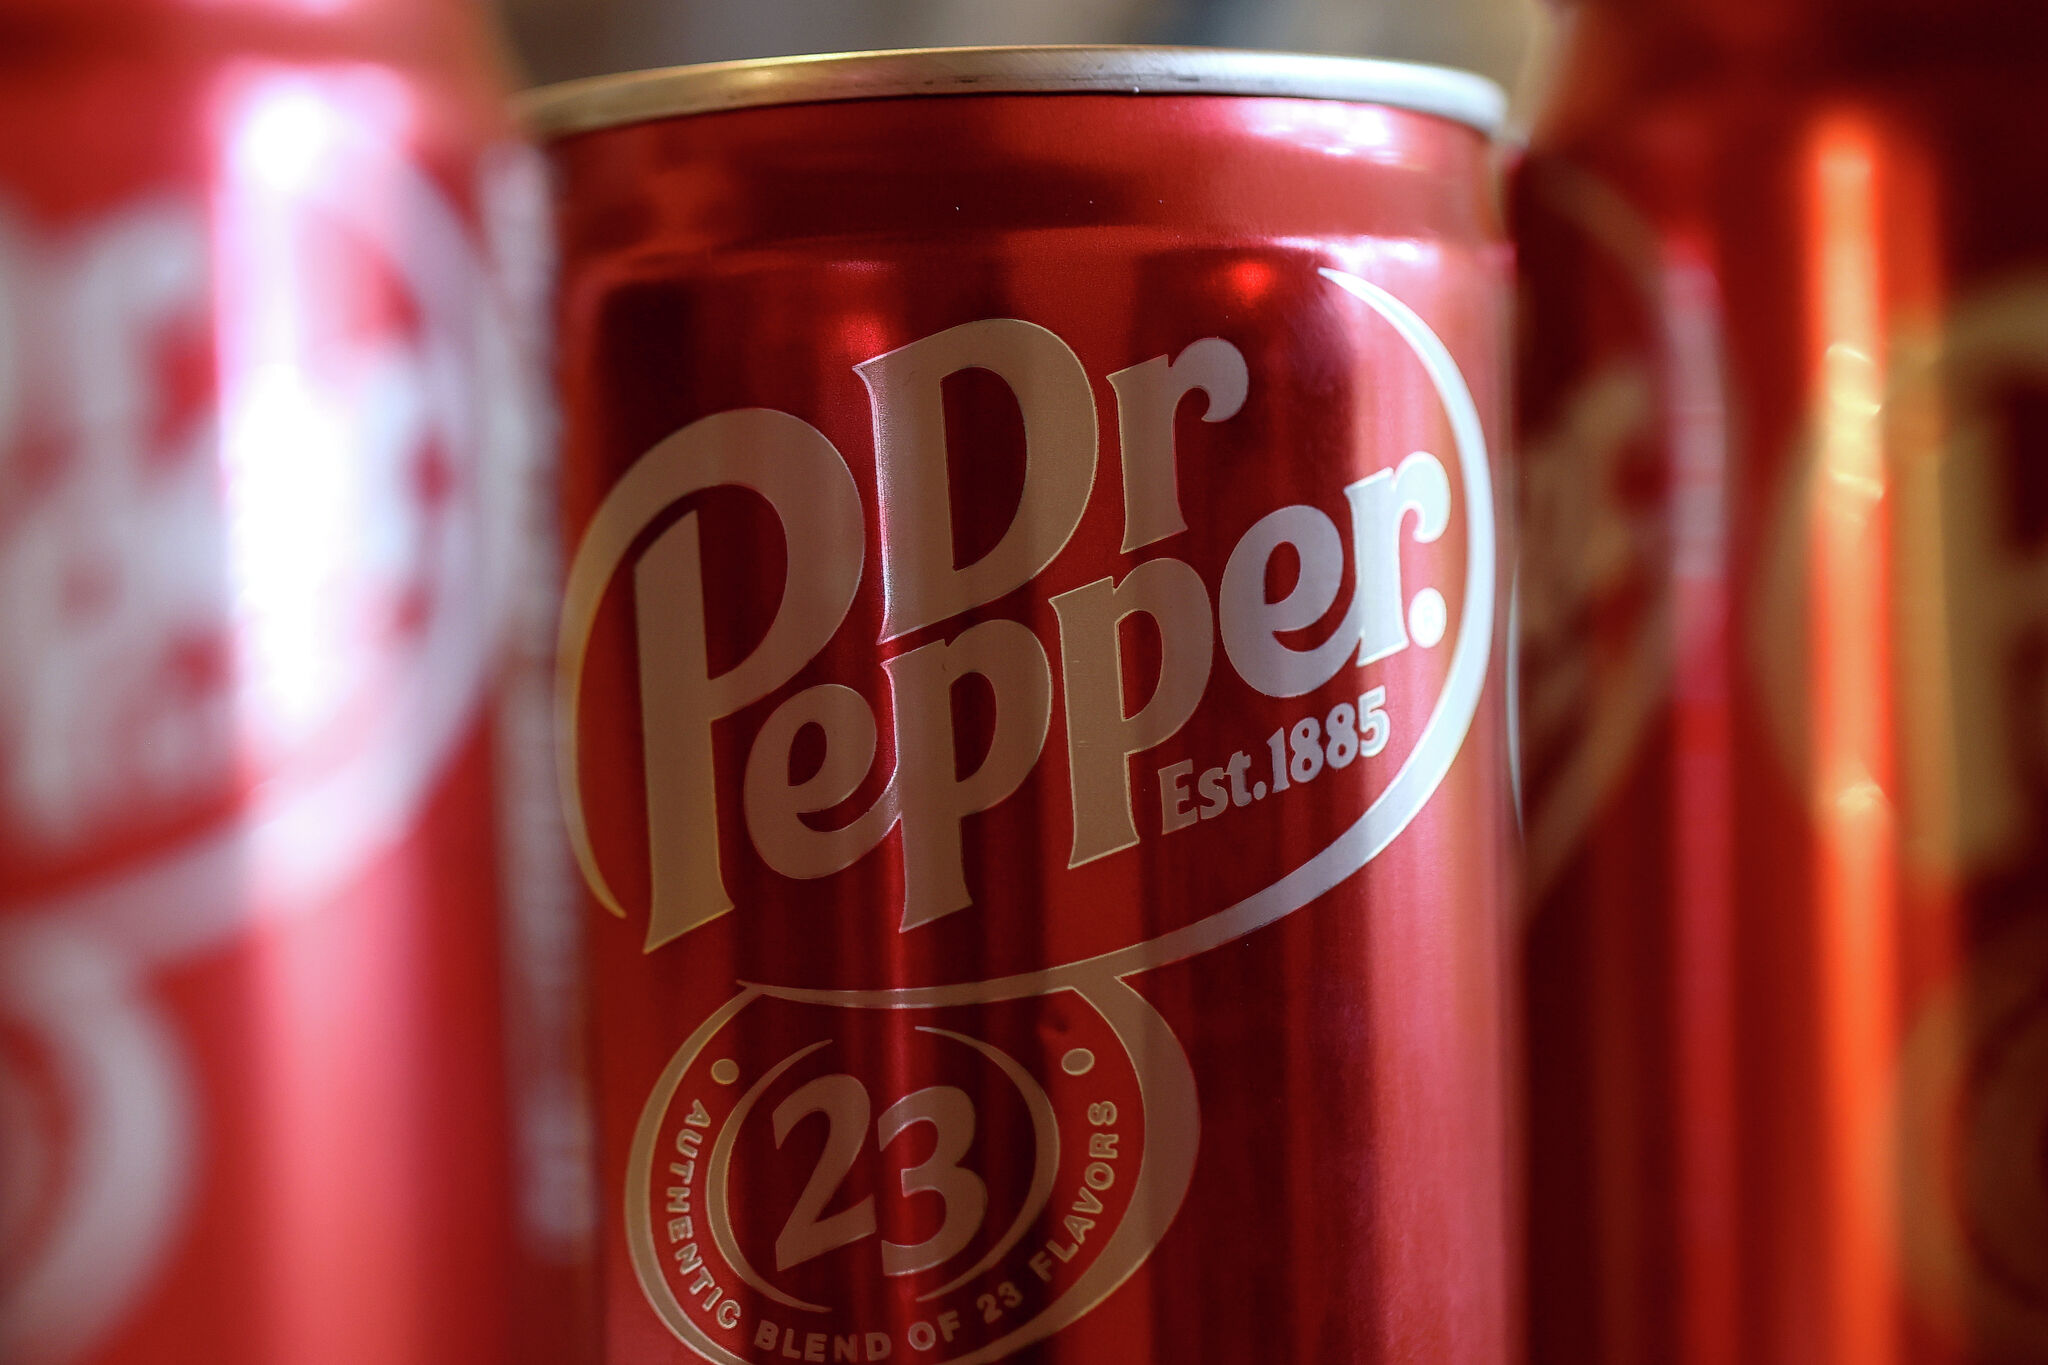 Texas-based soda Dr. Pepper ranks second among America’s most popular sodas